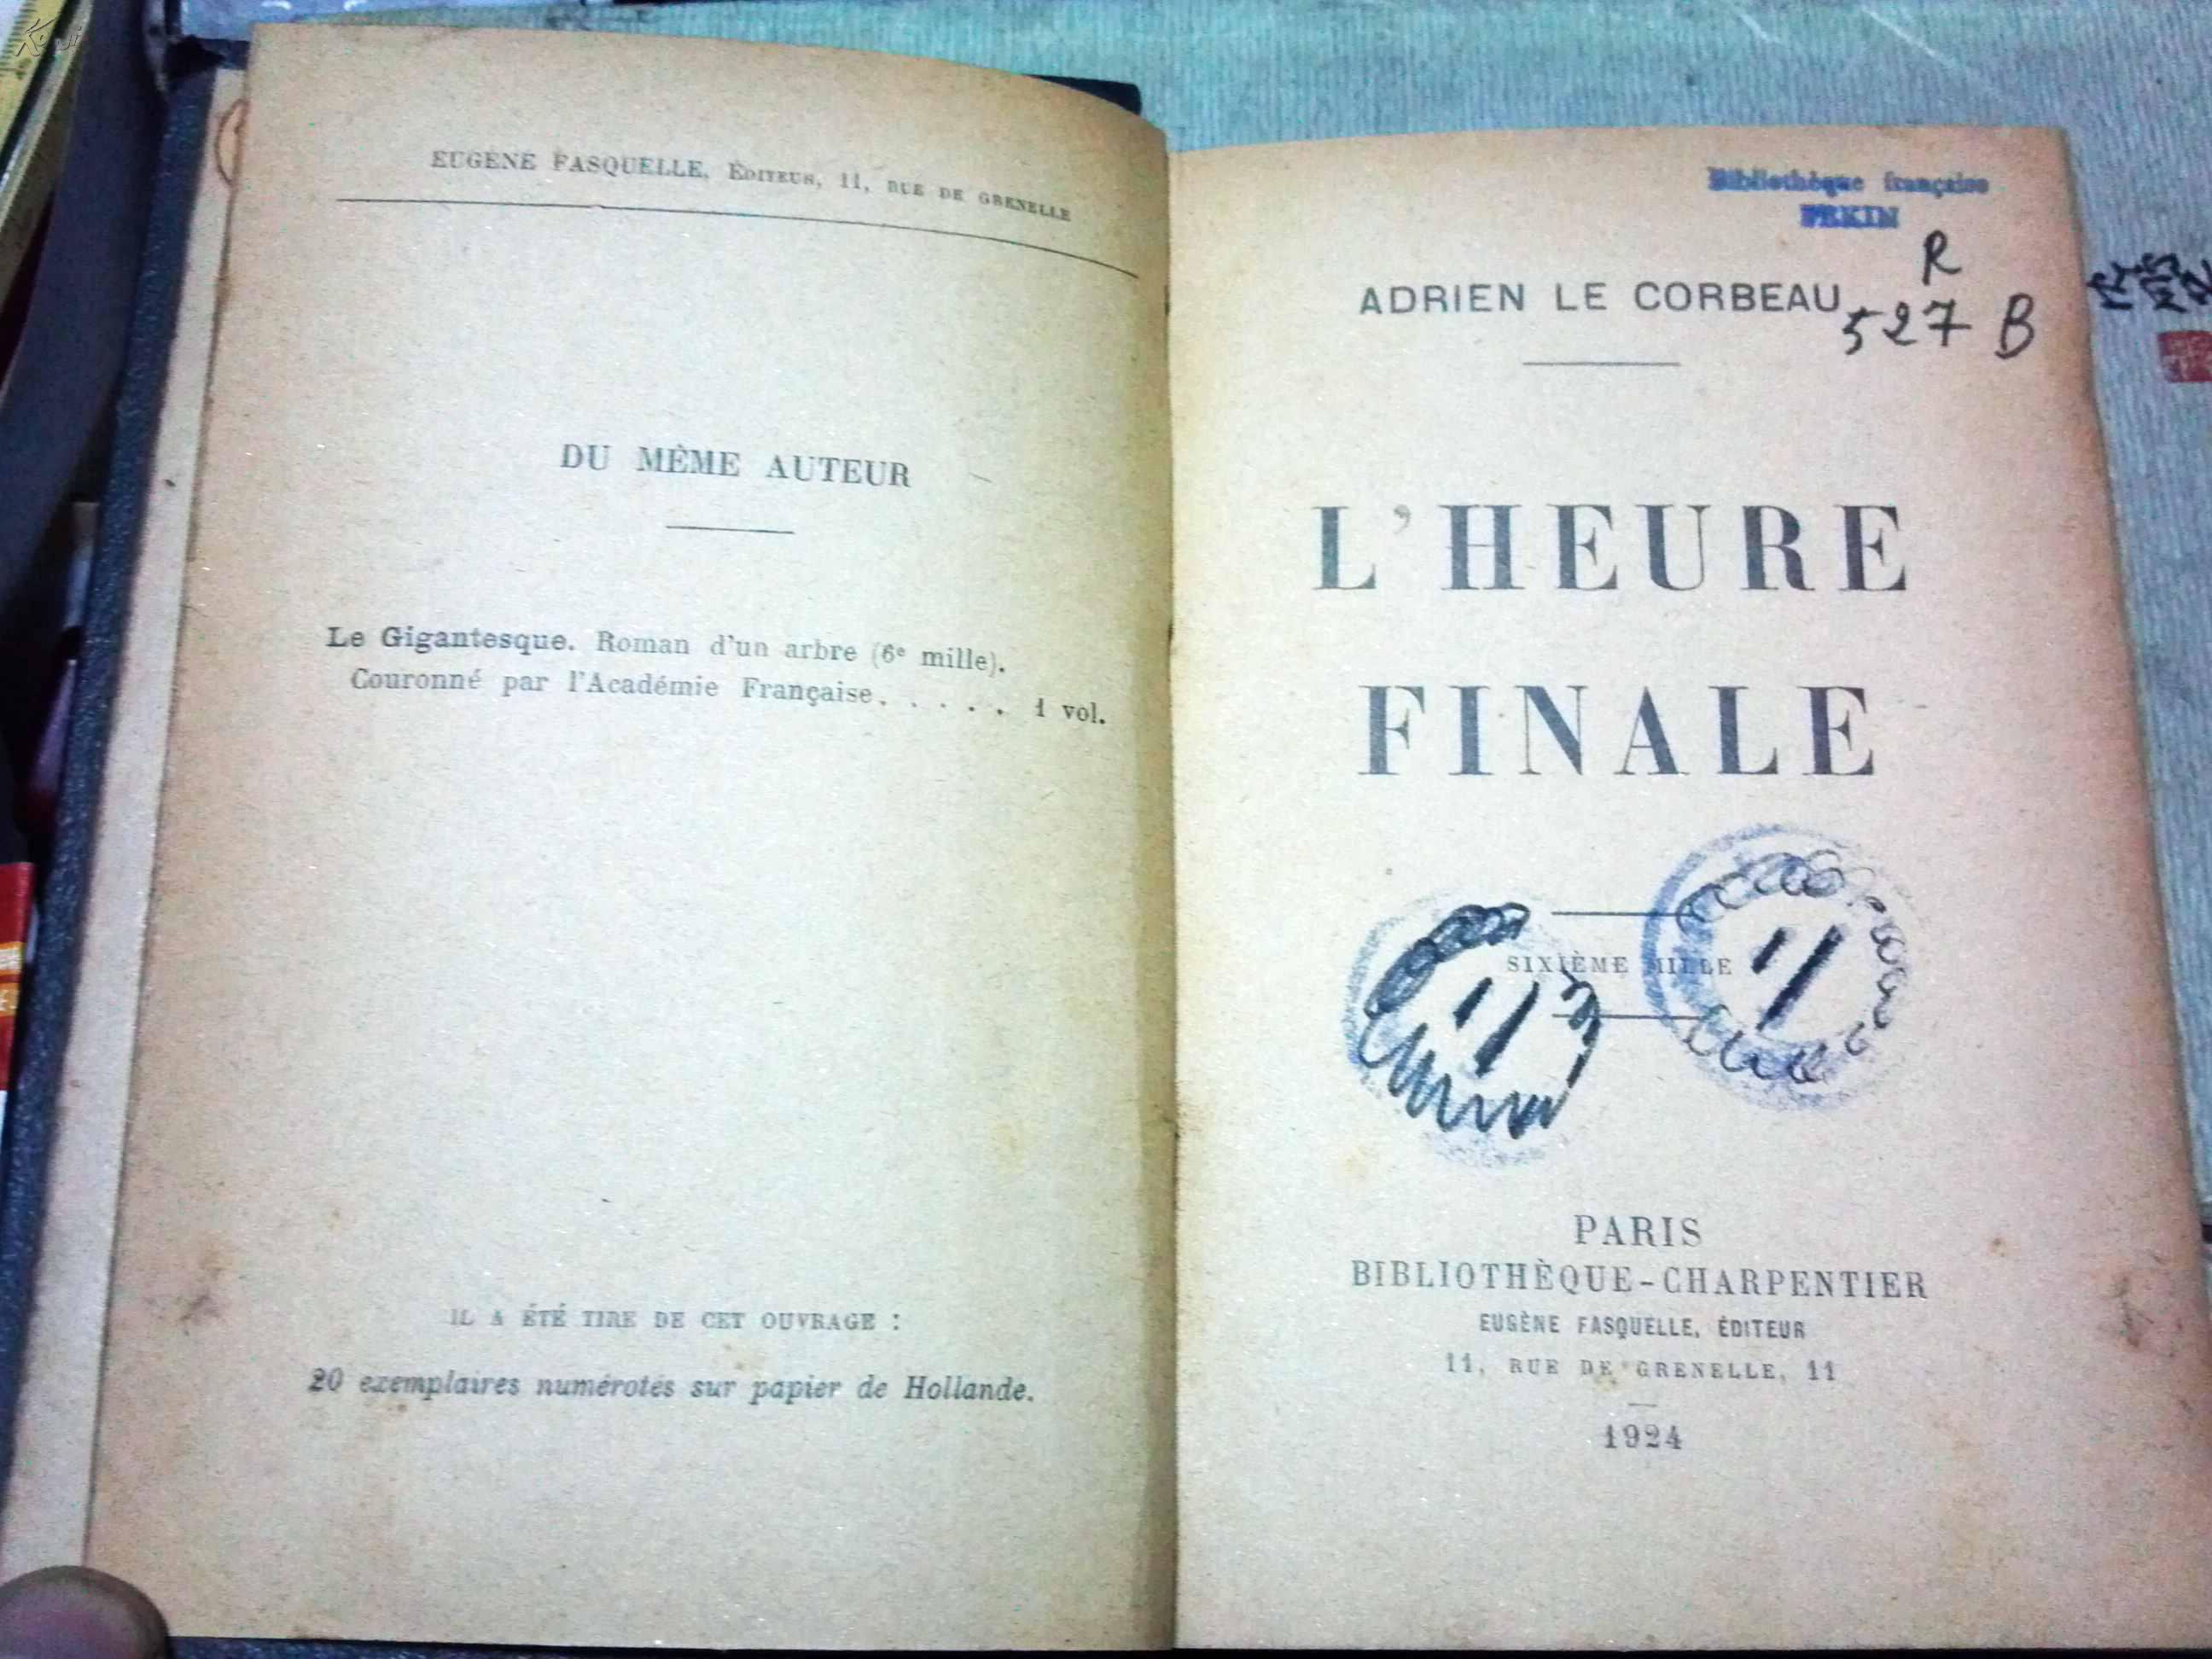 ADRIEN LE CORBEAU L'HEURE FINALE    阿德里安 最后的时刻    【1924年巴黎图书馆卡芬达出版 牛皮包脊】